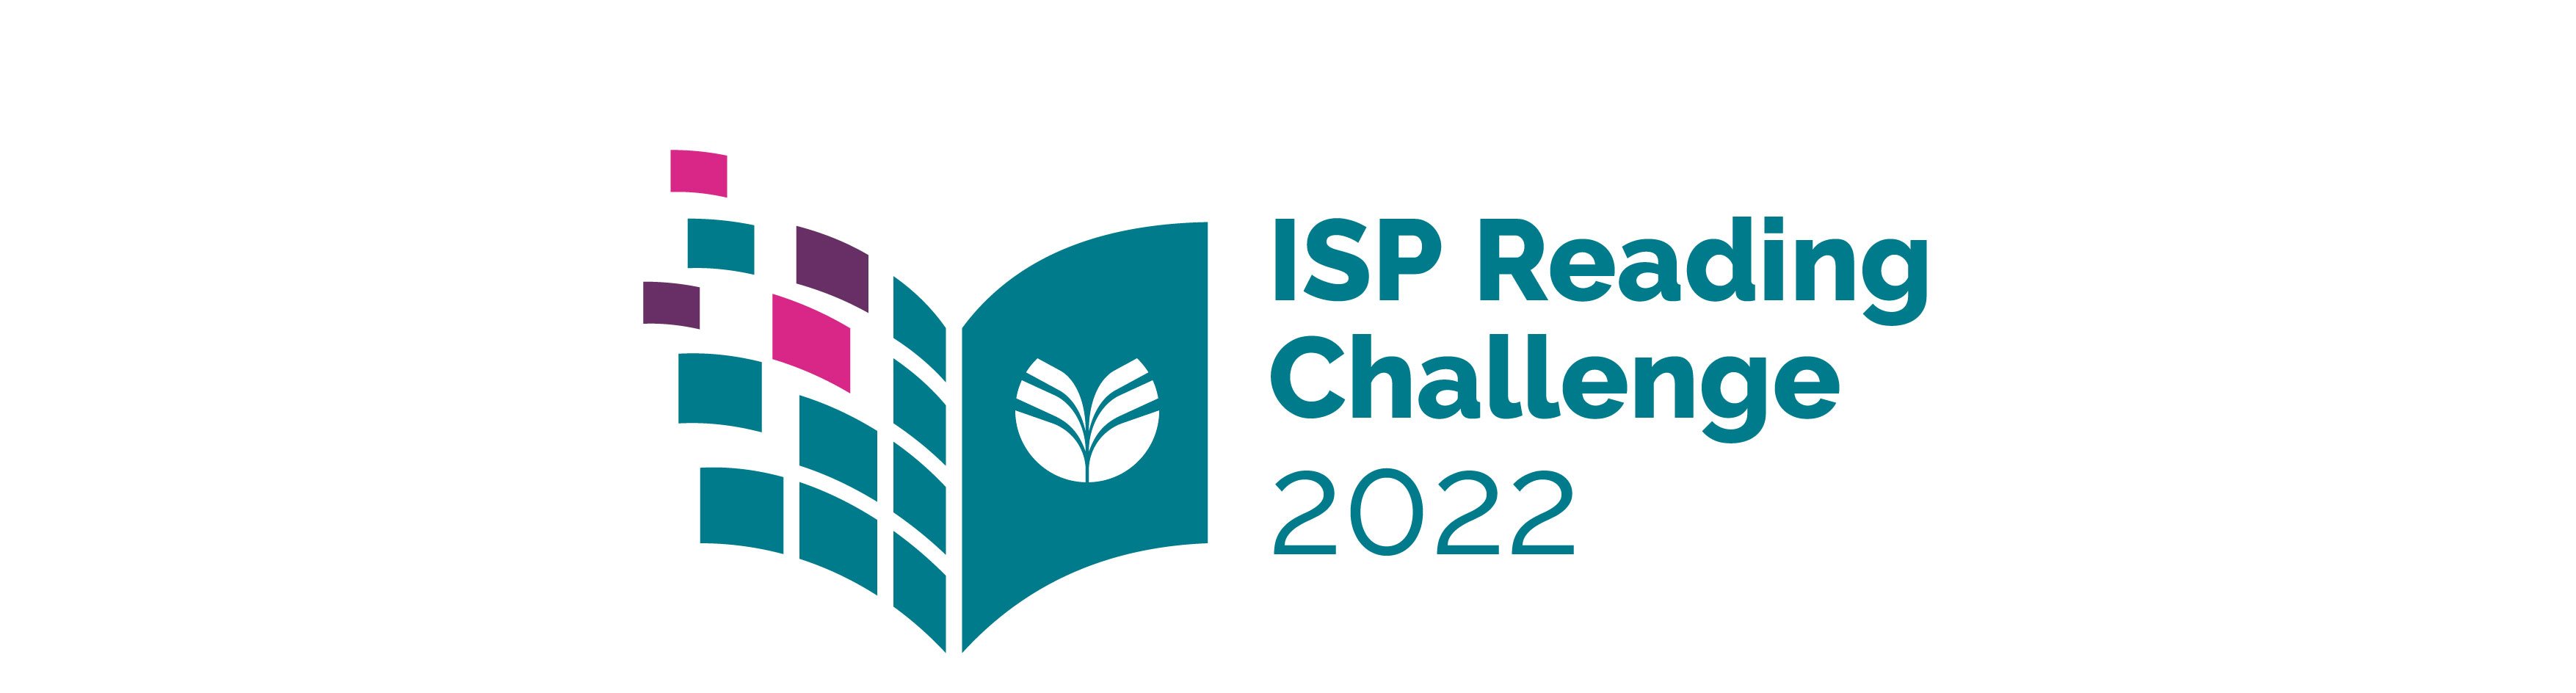 ISP - Reading Challenge 2022 poster-01